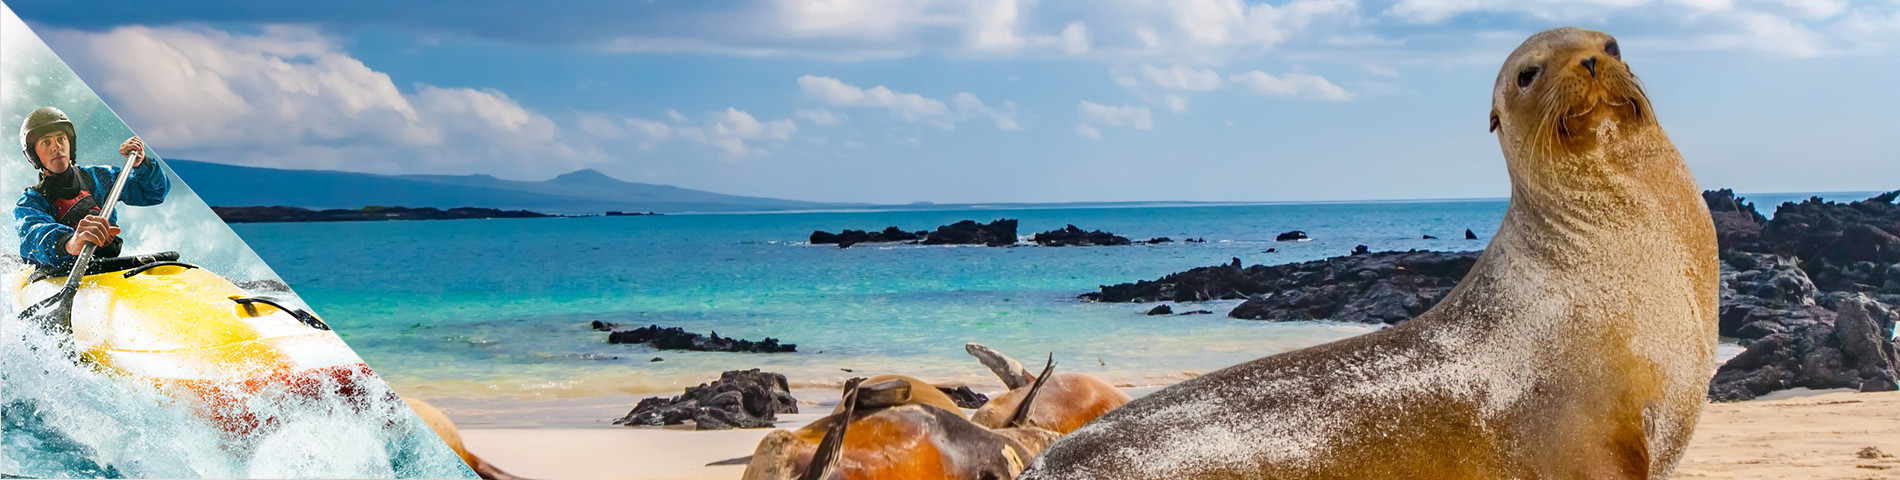 Ilhas Galápagos - Espanhol & Esportes de Aventura